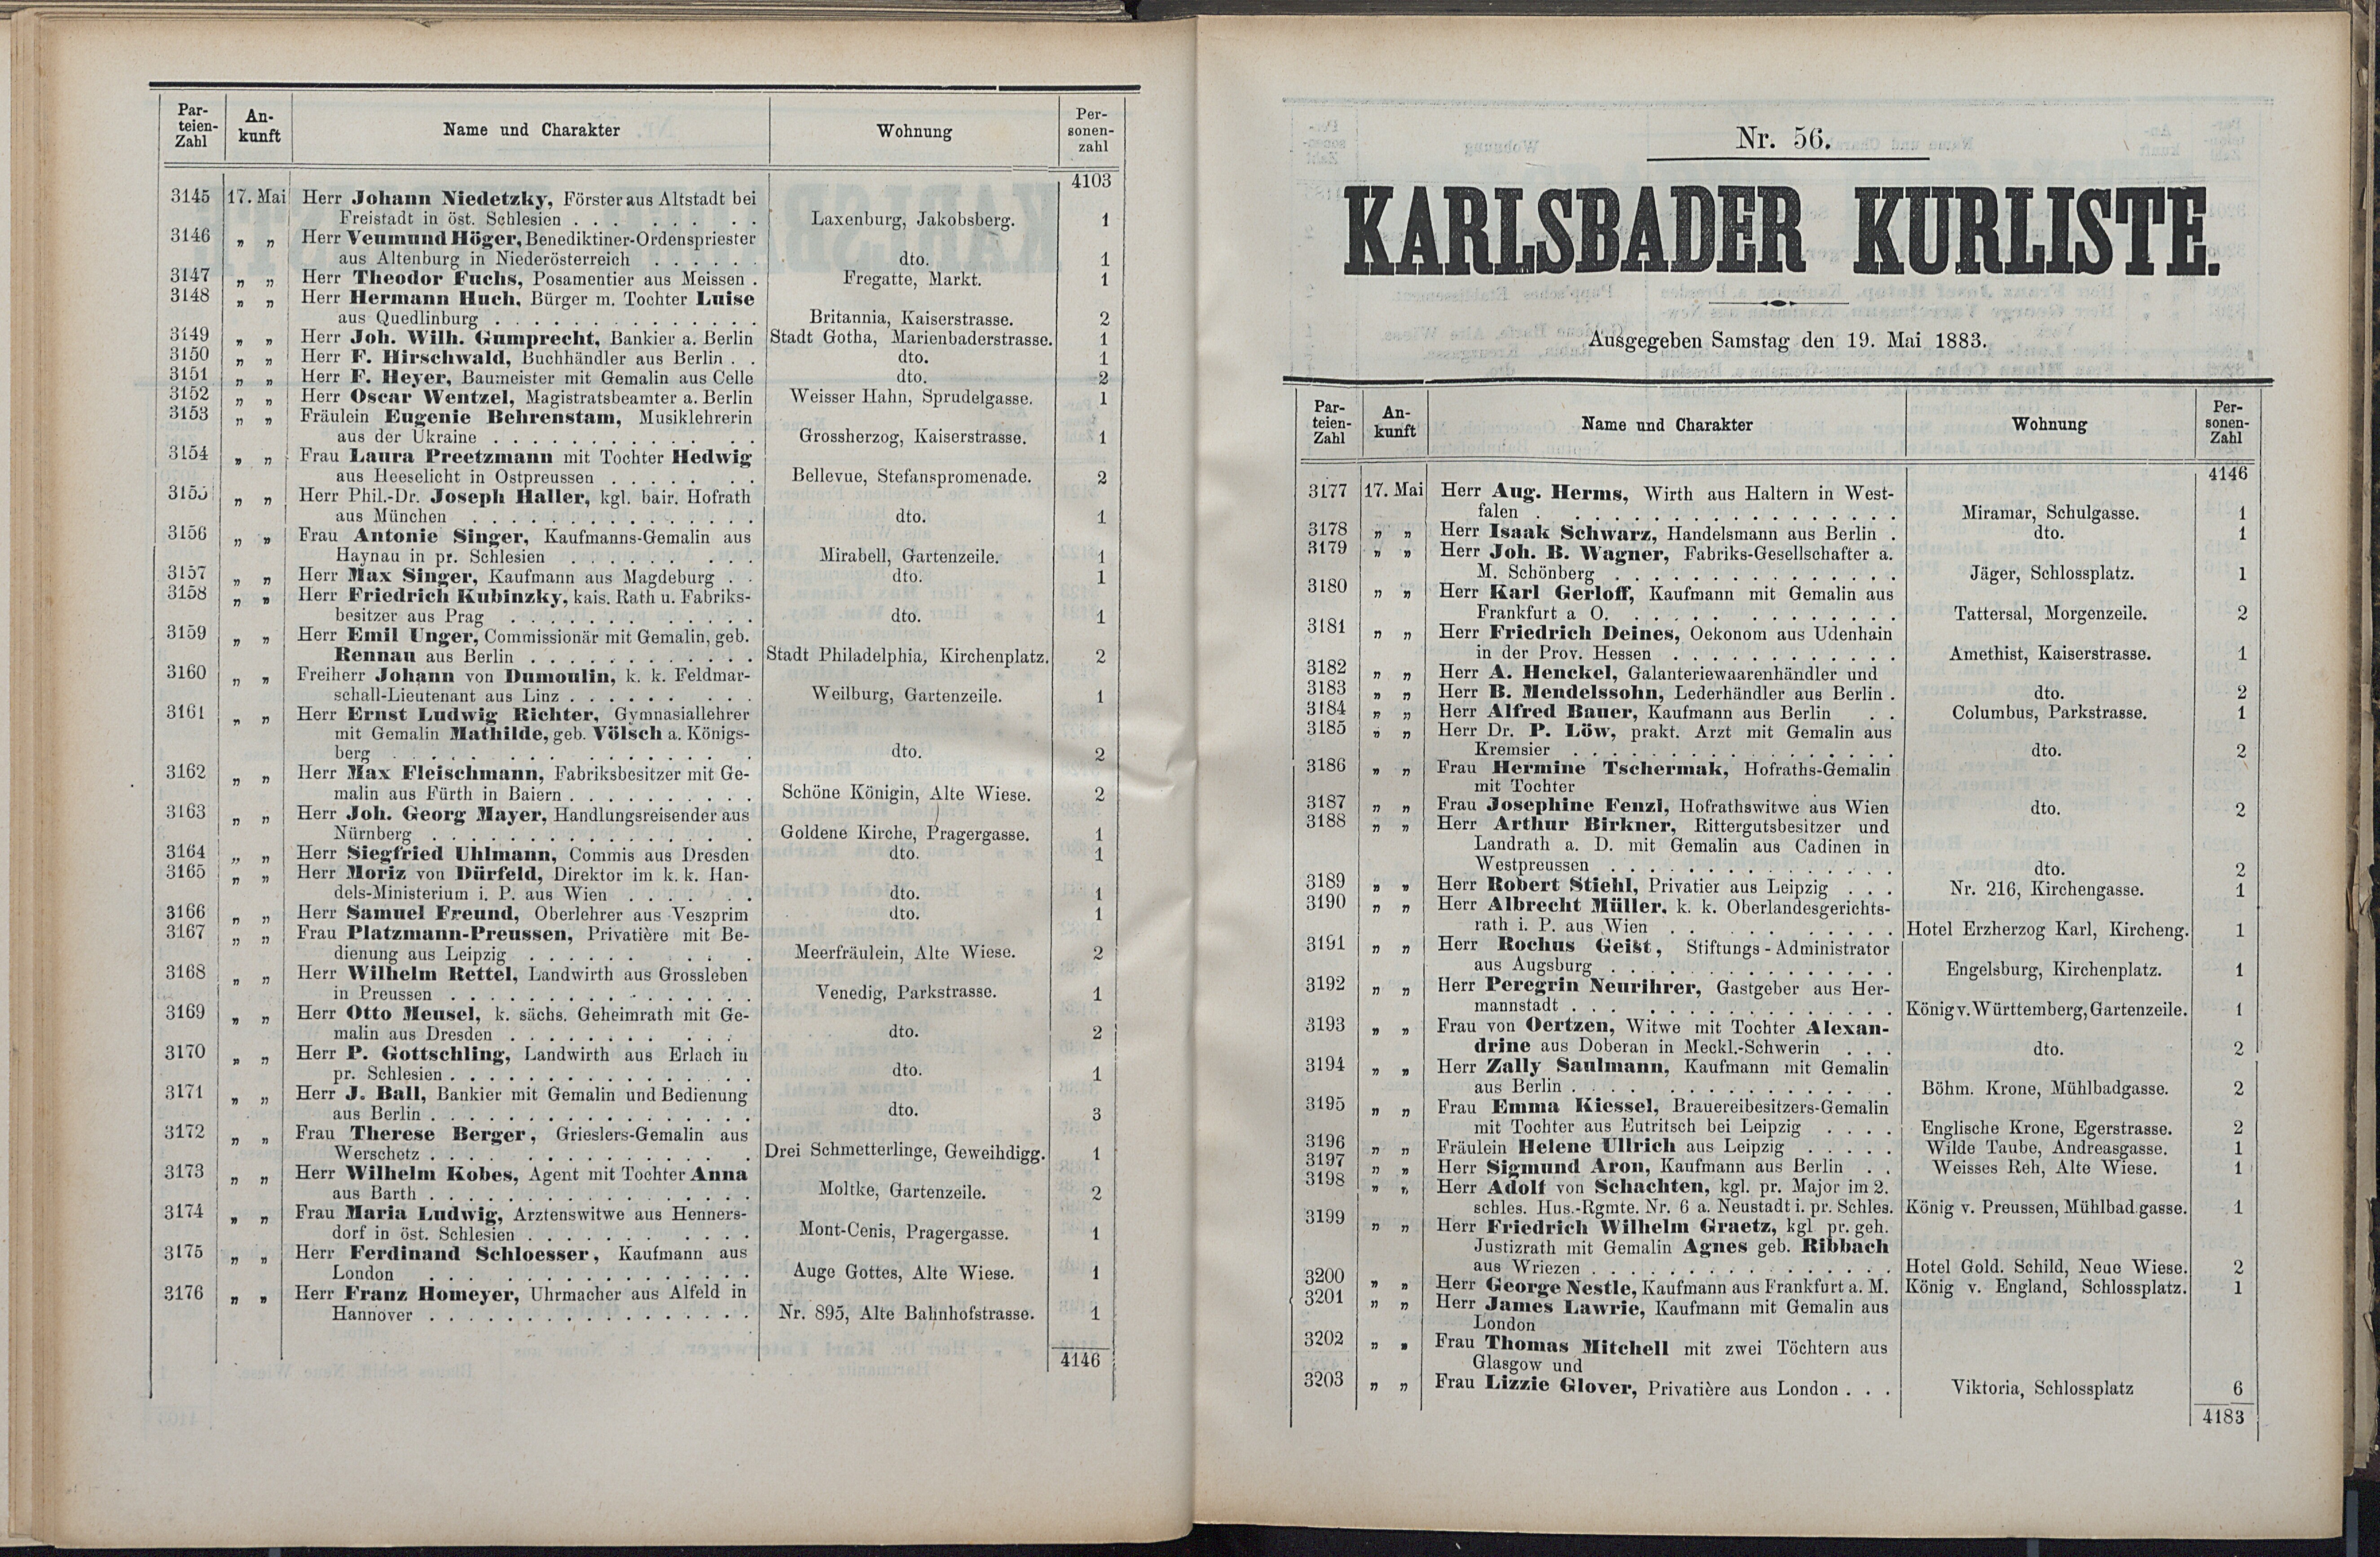 108. soap-kv_knihovna_karlsbader-kurliste-1883_1090